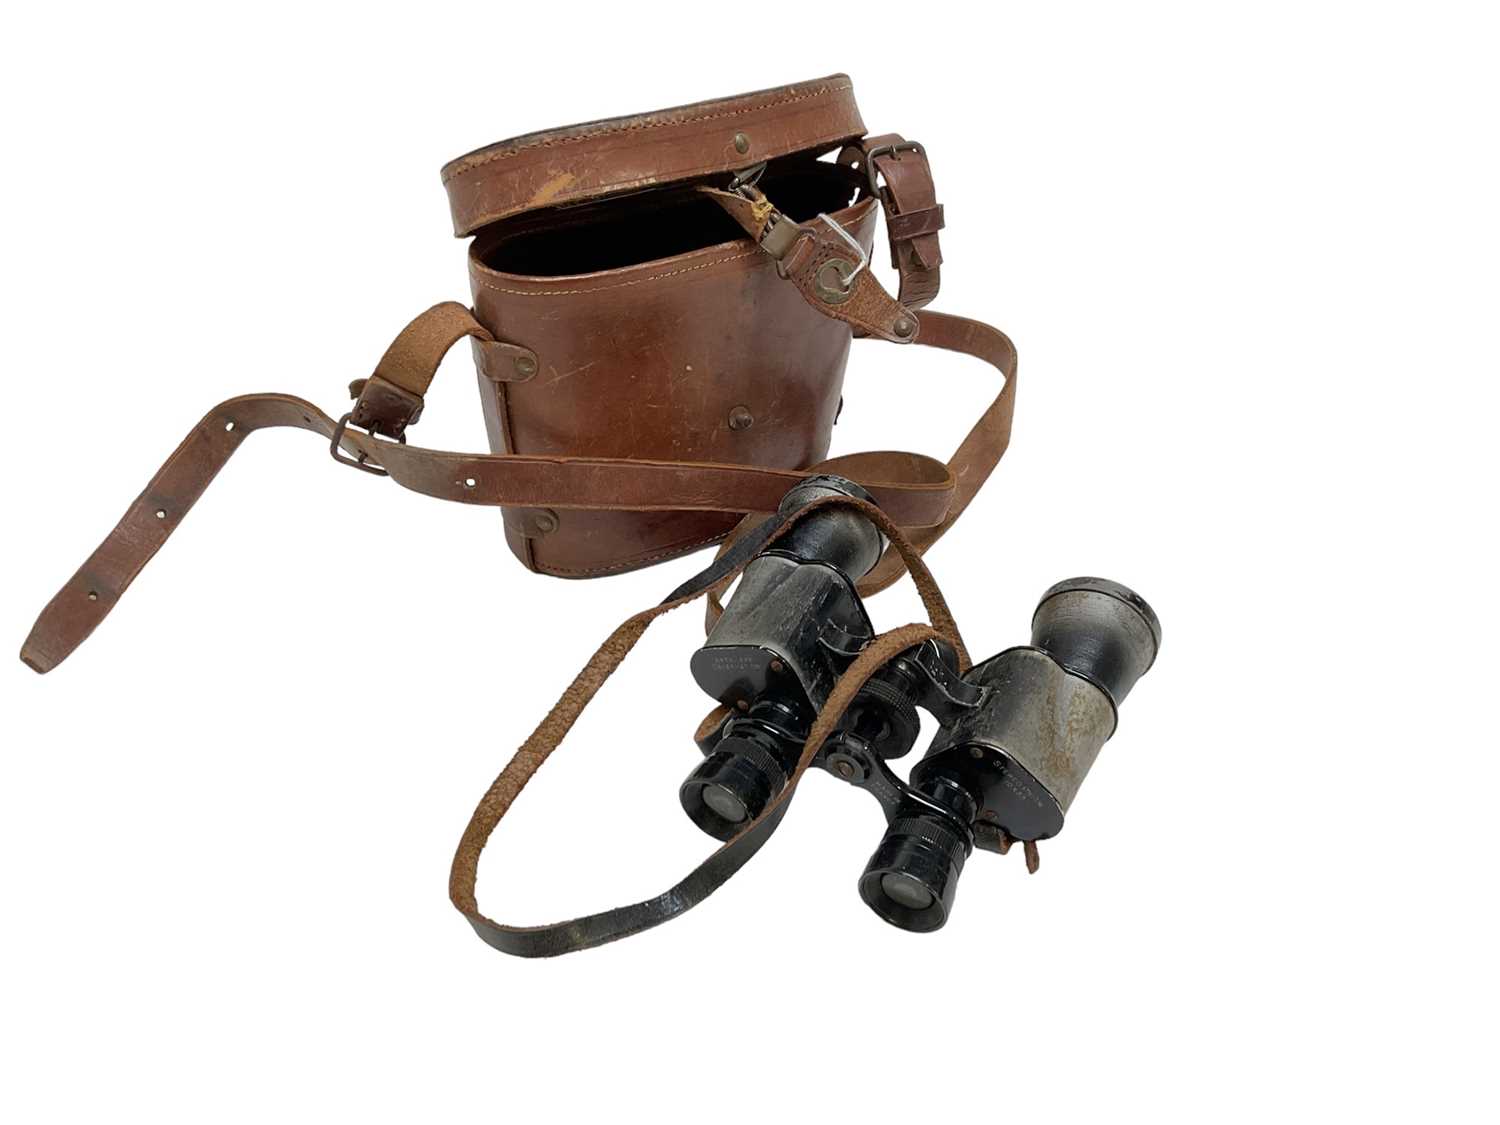 Second World War era French Artillery Observation binoculars in brown leather case.